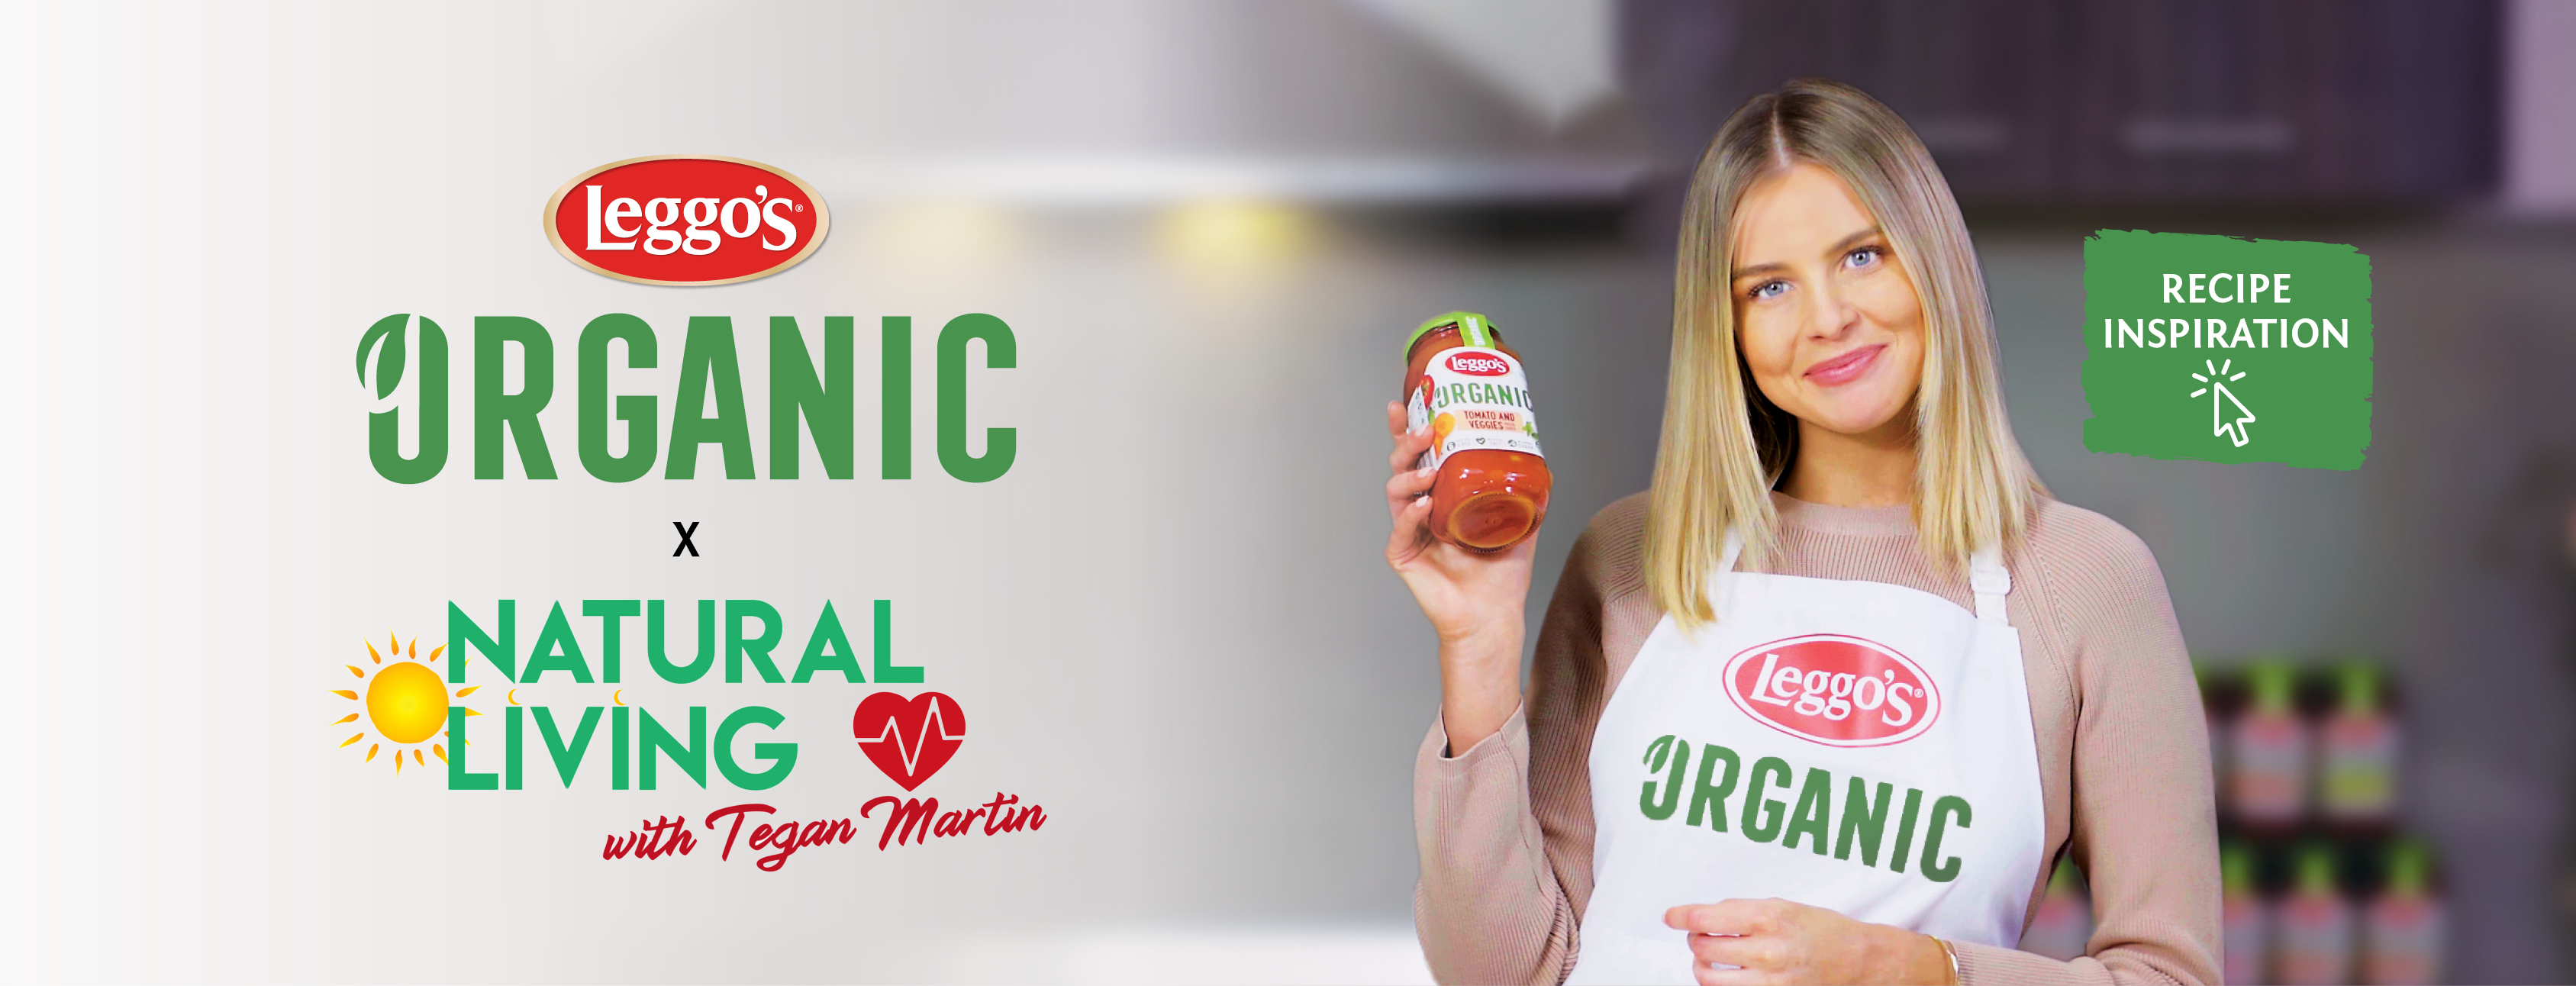 Banner image of girl holding leggos organic tomato sauce 